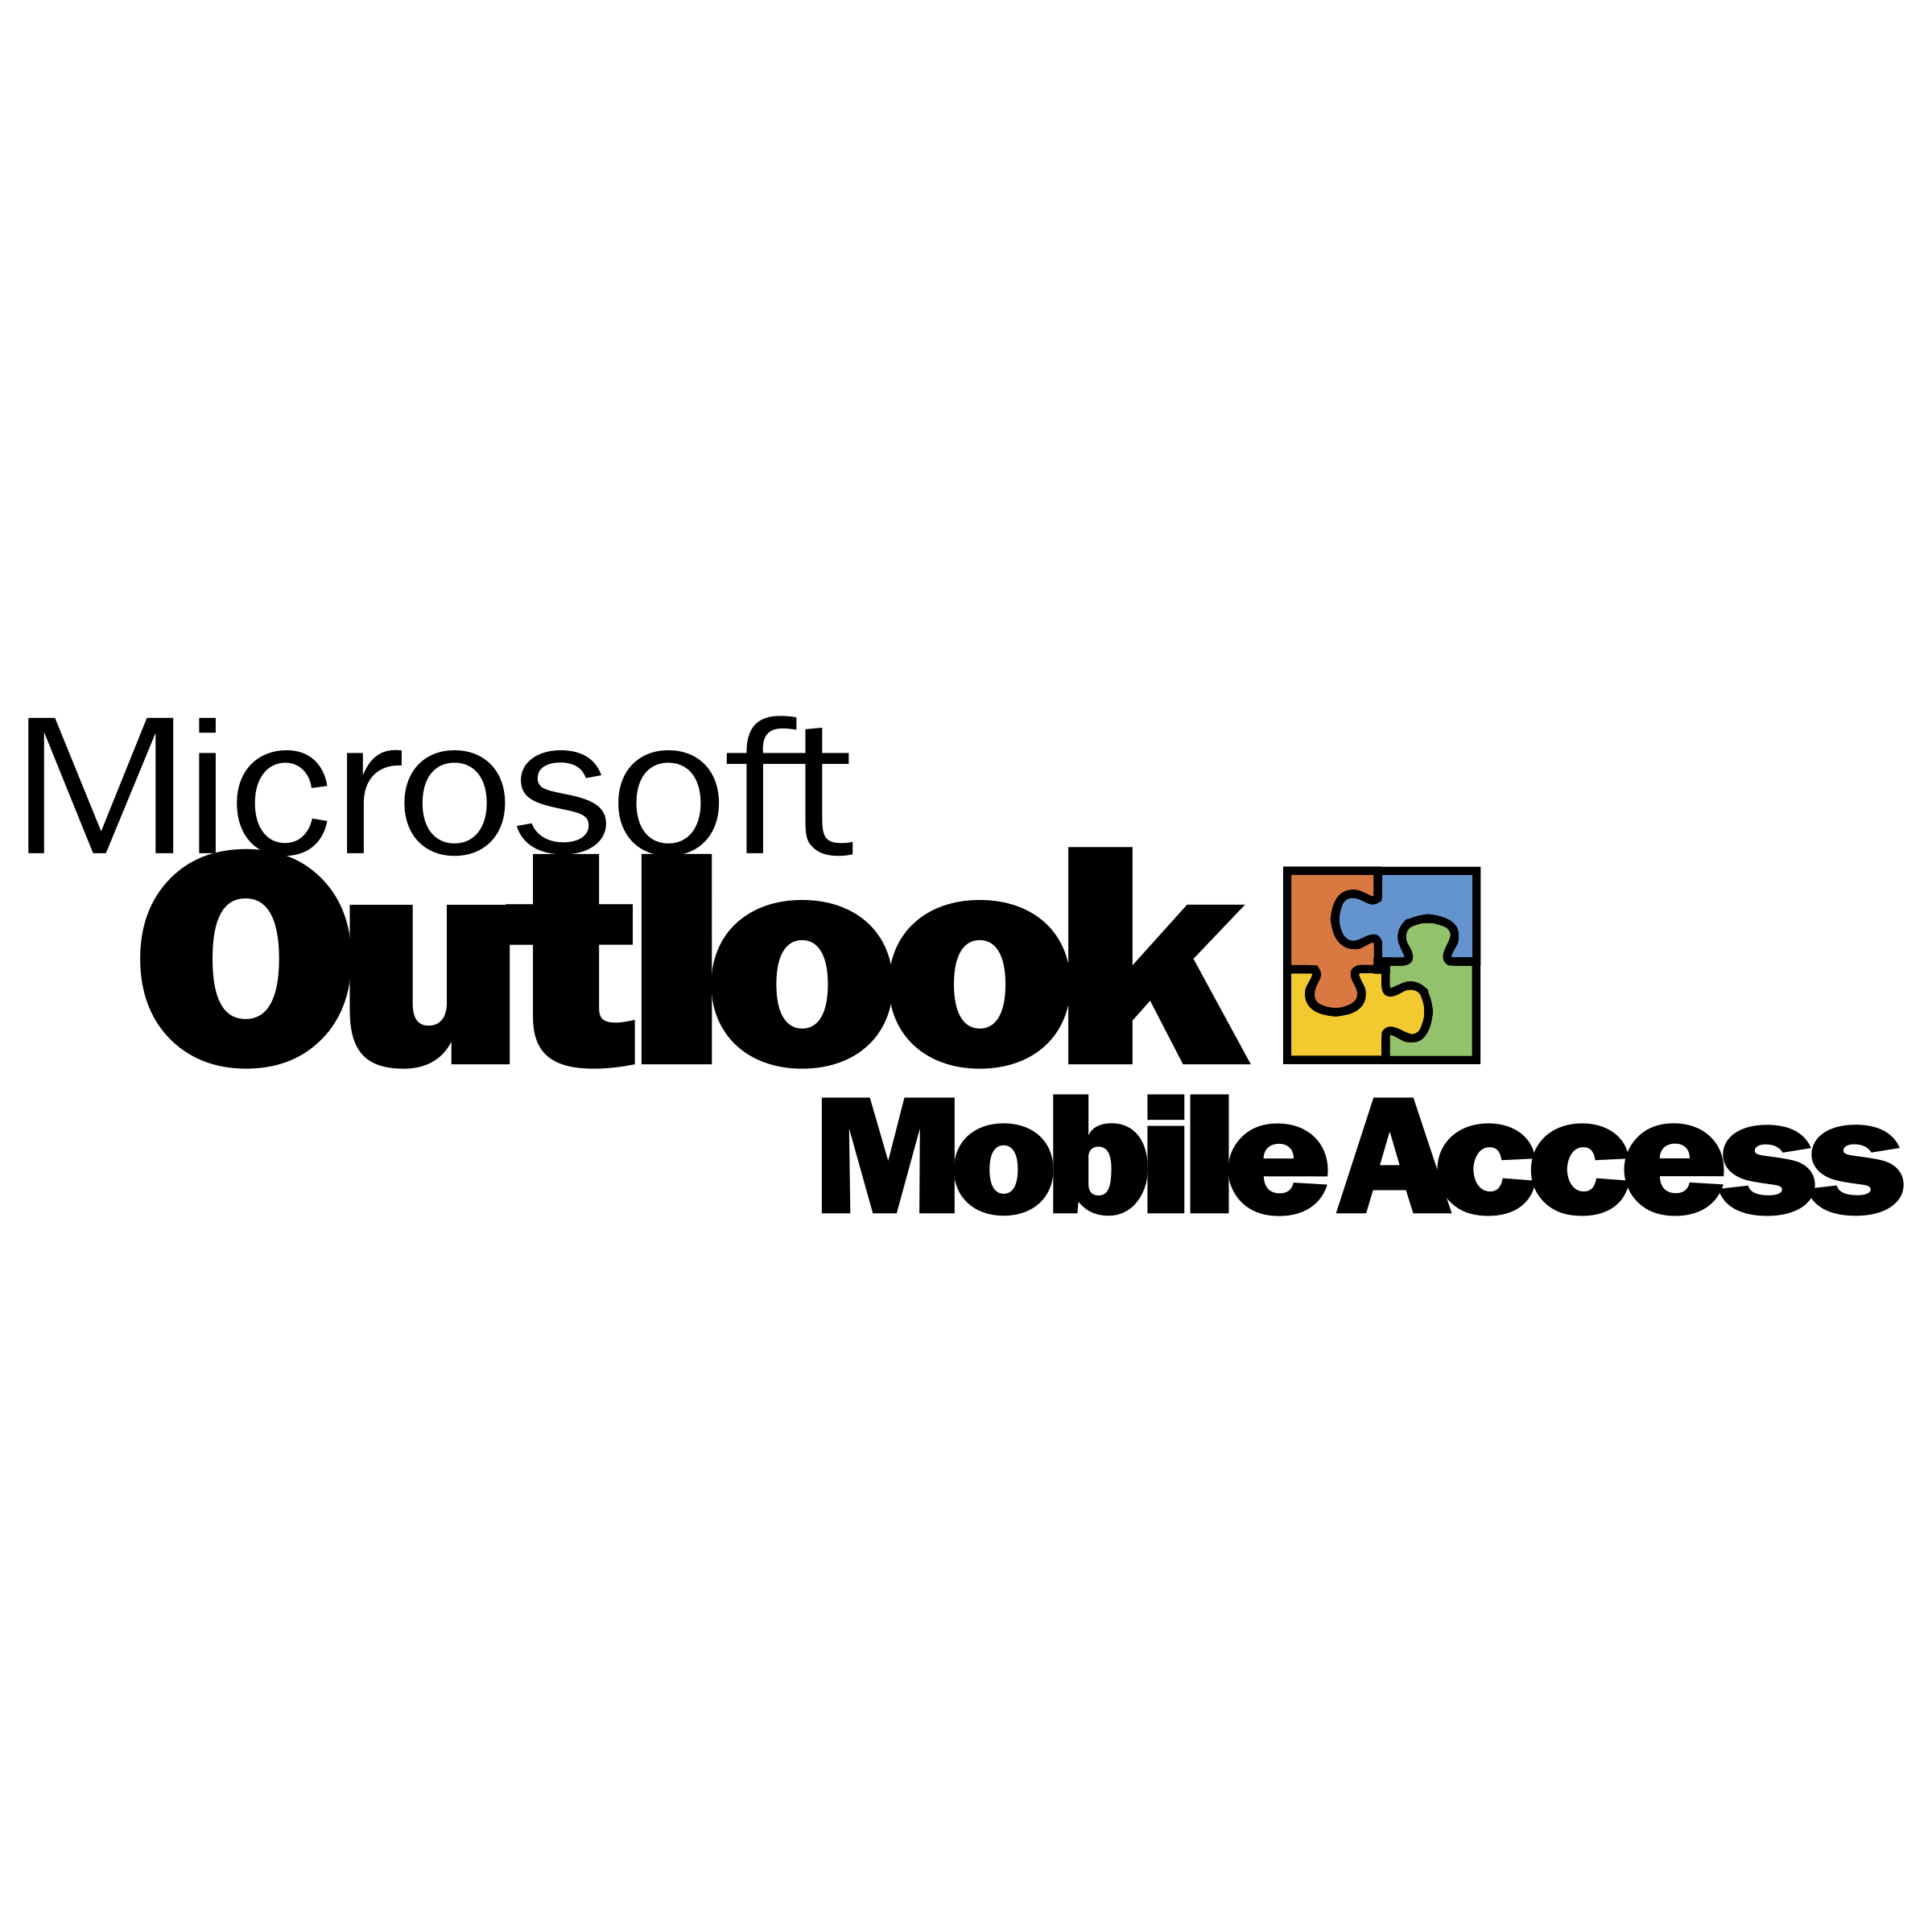 Outlook Logo - Microsoft Outlook Mobile Access Logo PNG Transparent & SVG Vector ...